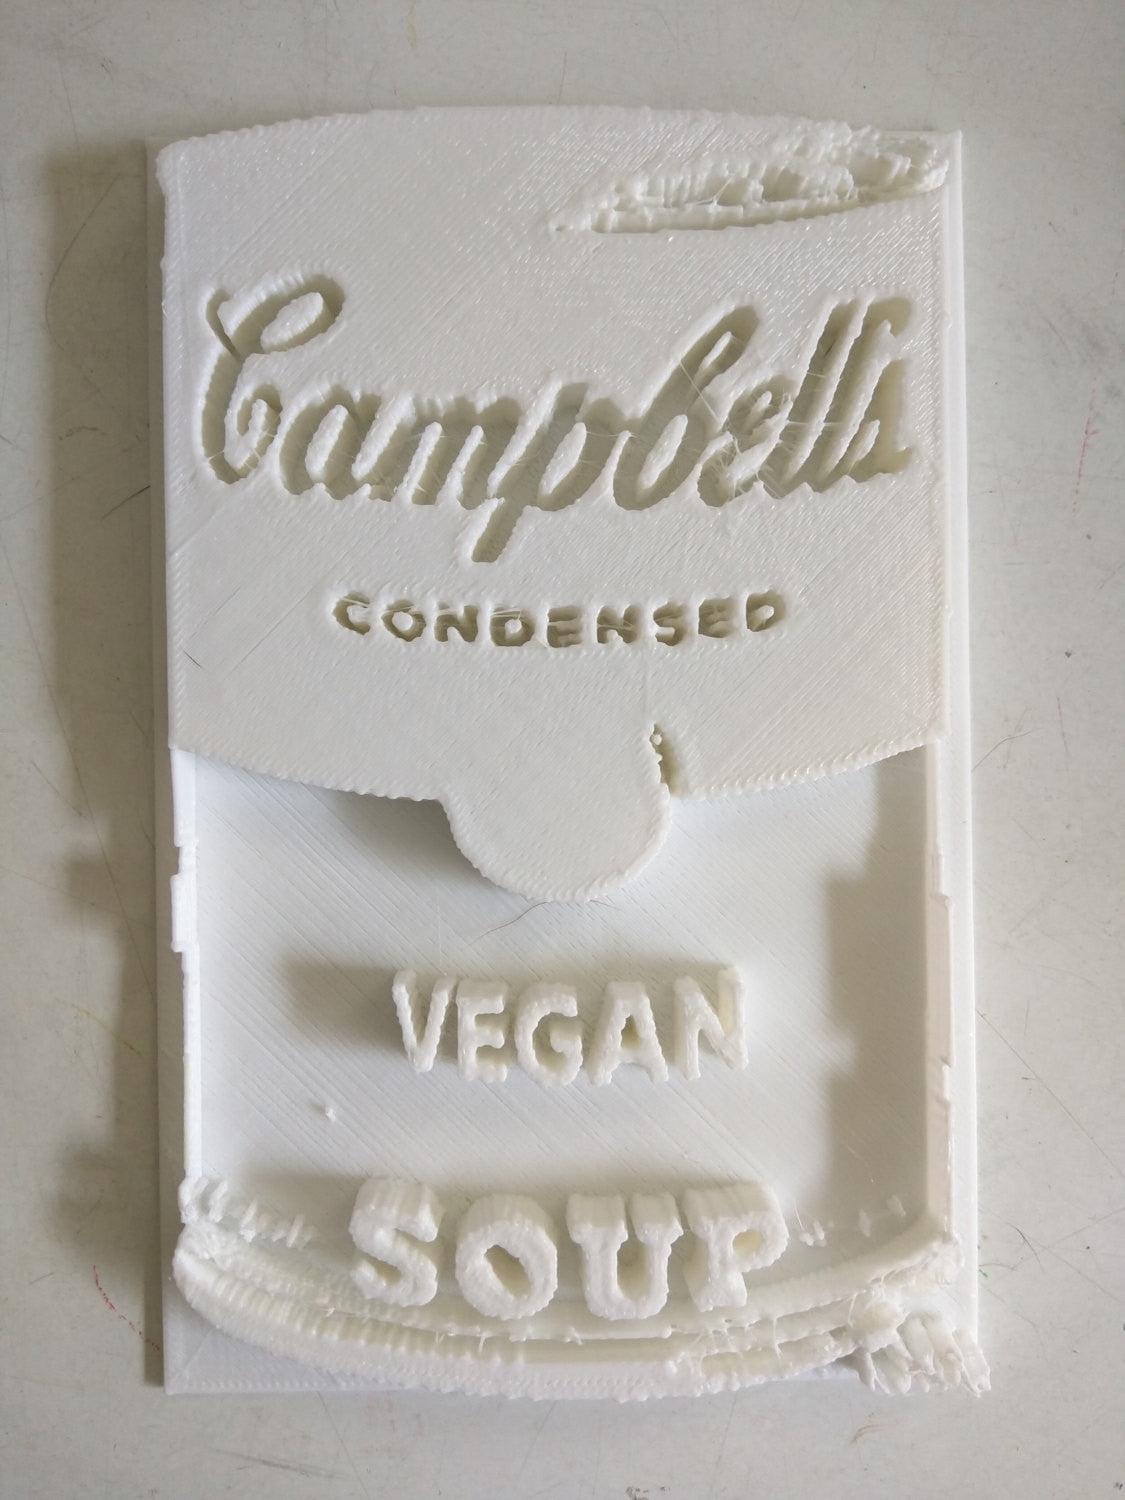 3D printed Campbell's Vegan Soup by L3f0u